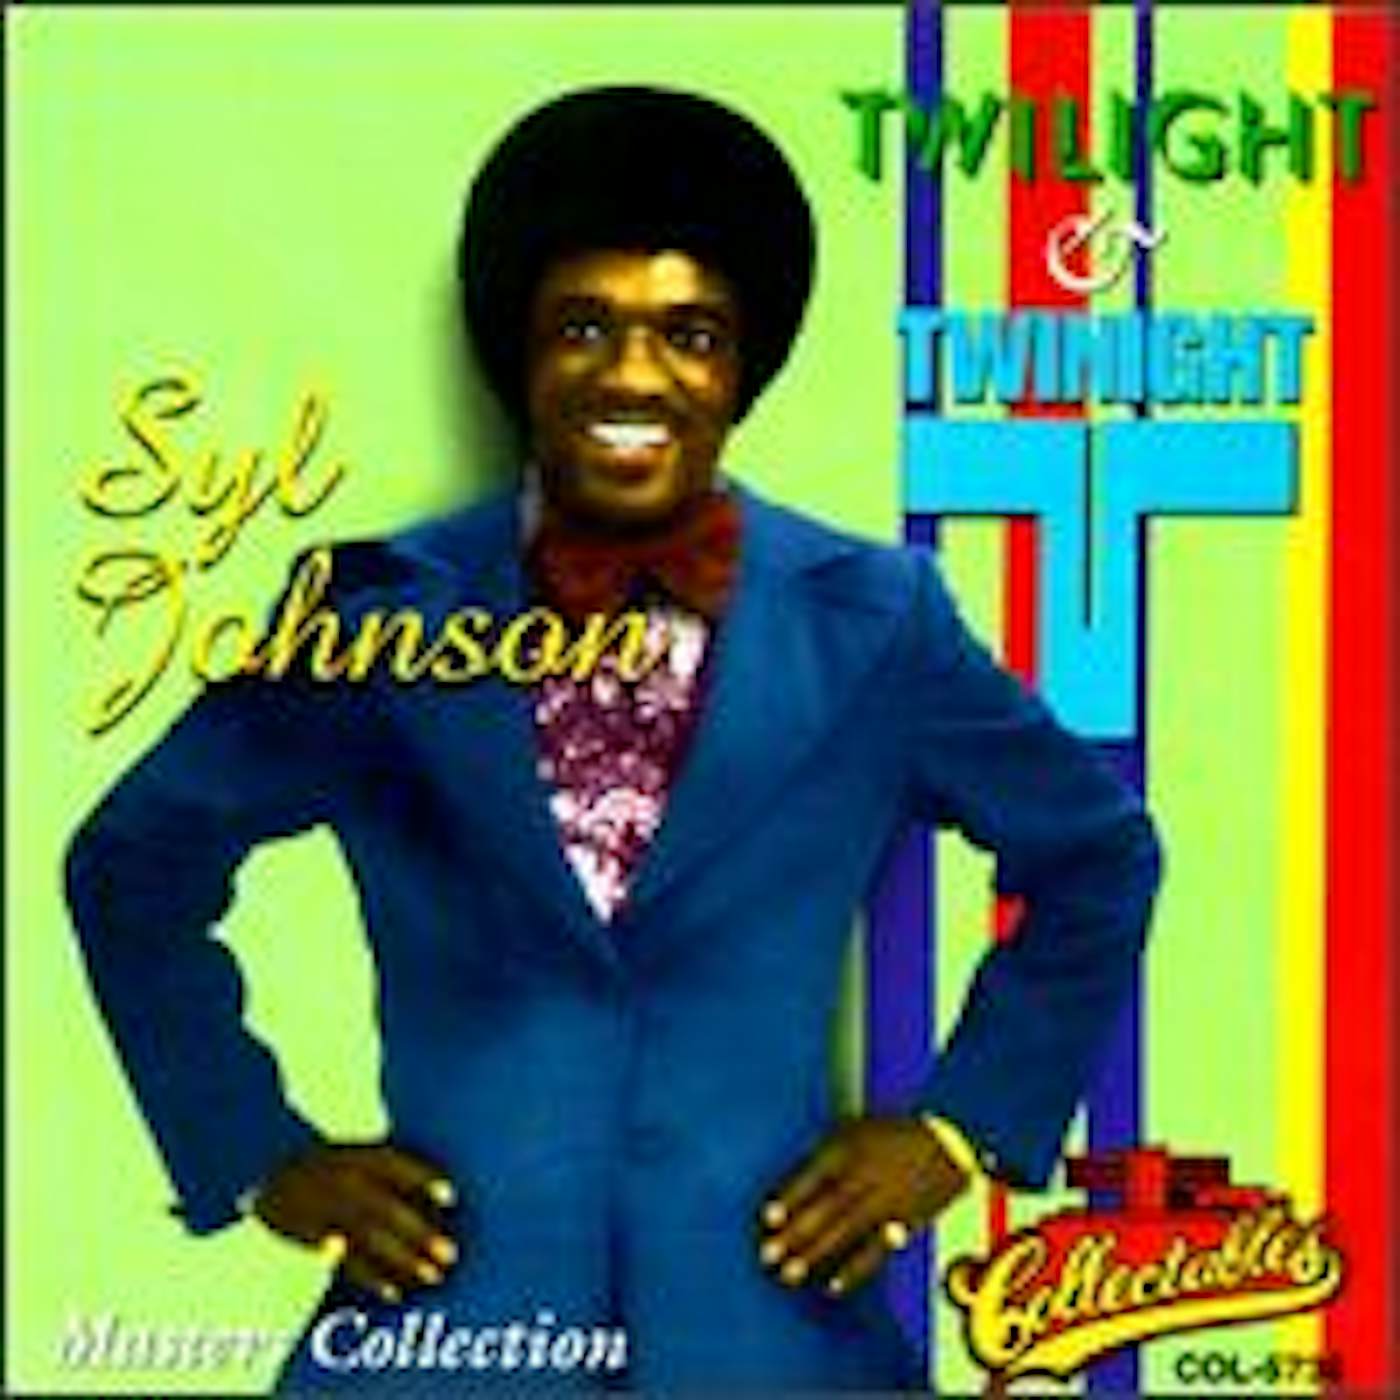 Syl Johnson TWILIGHT & TWINIGHT: MASTERS COLLECTION CD